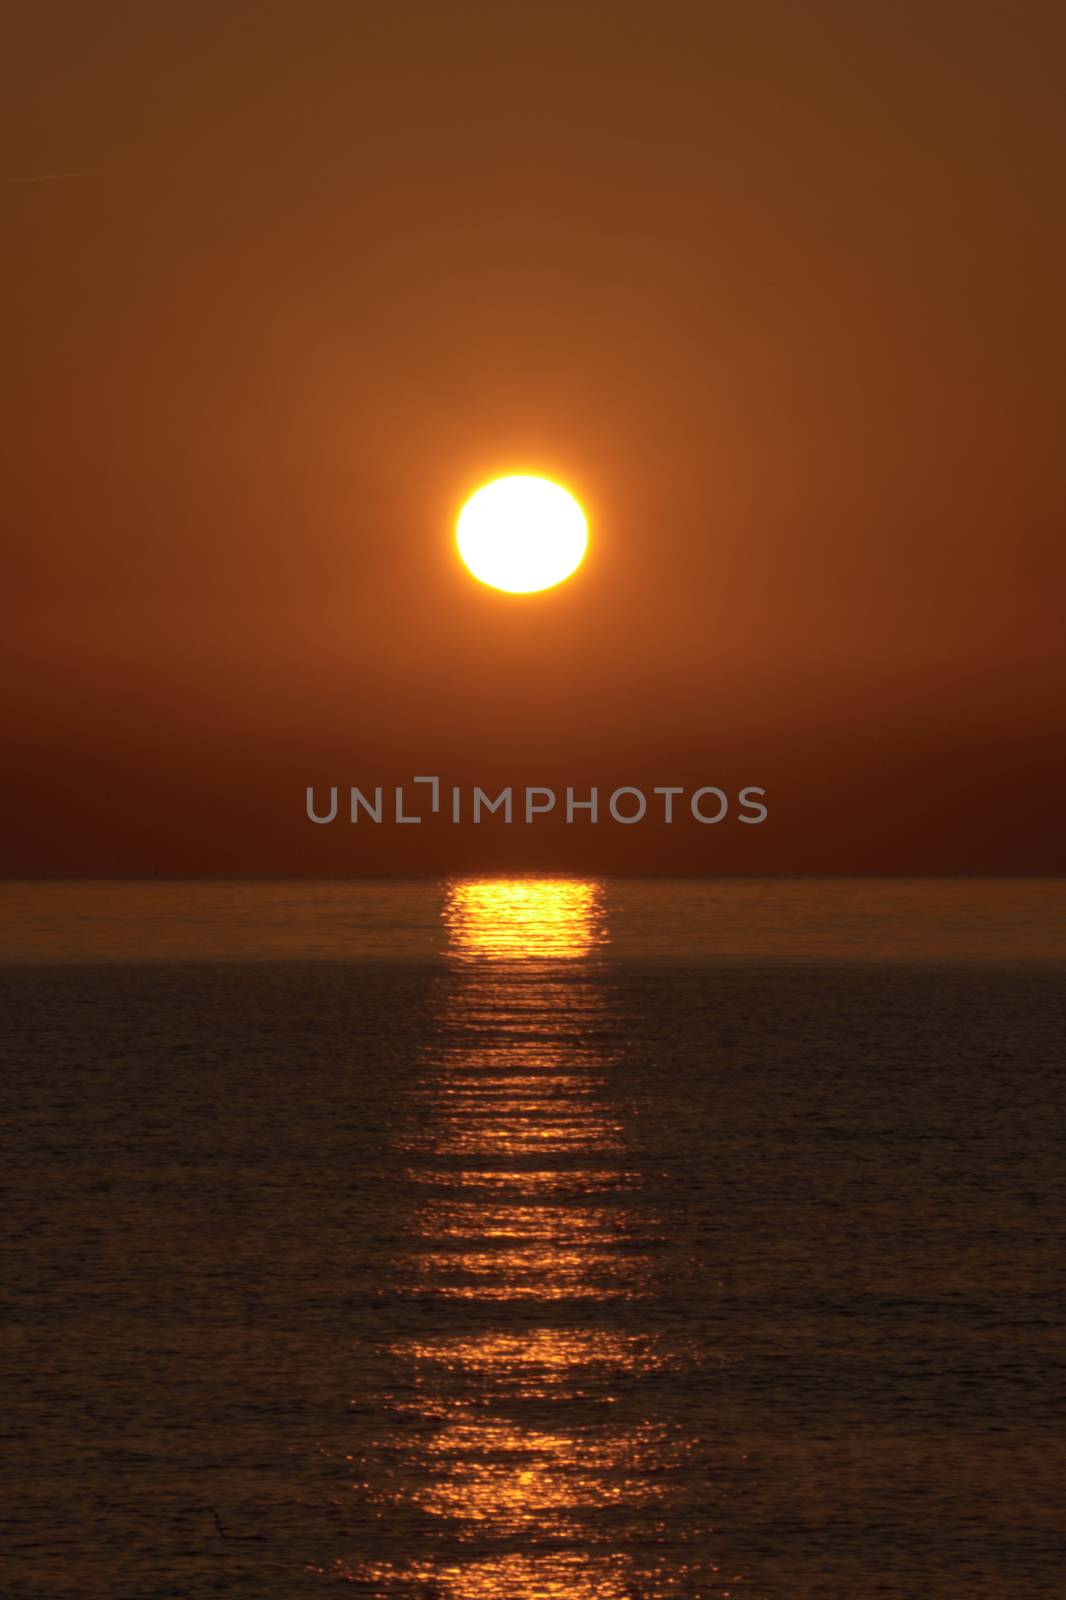 Sunrise on the beach, sun on the water, orange, reflections